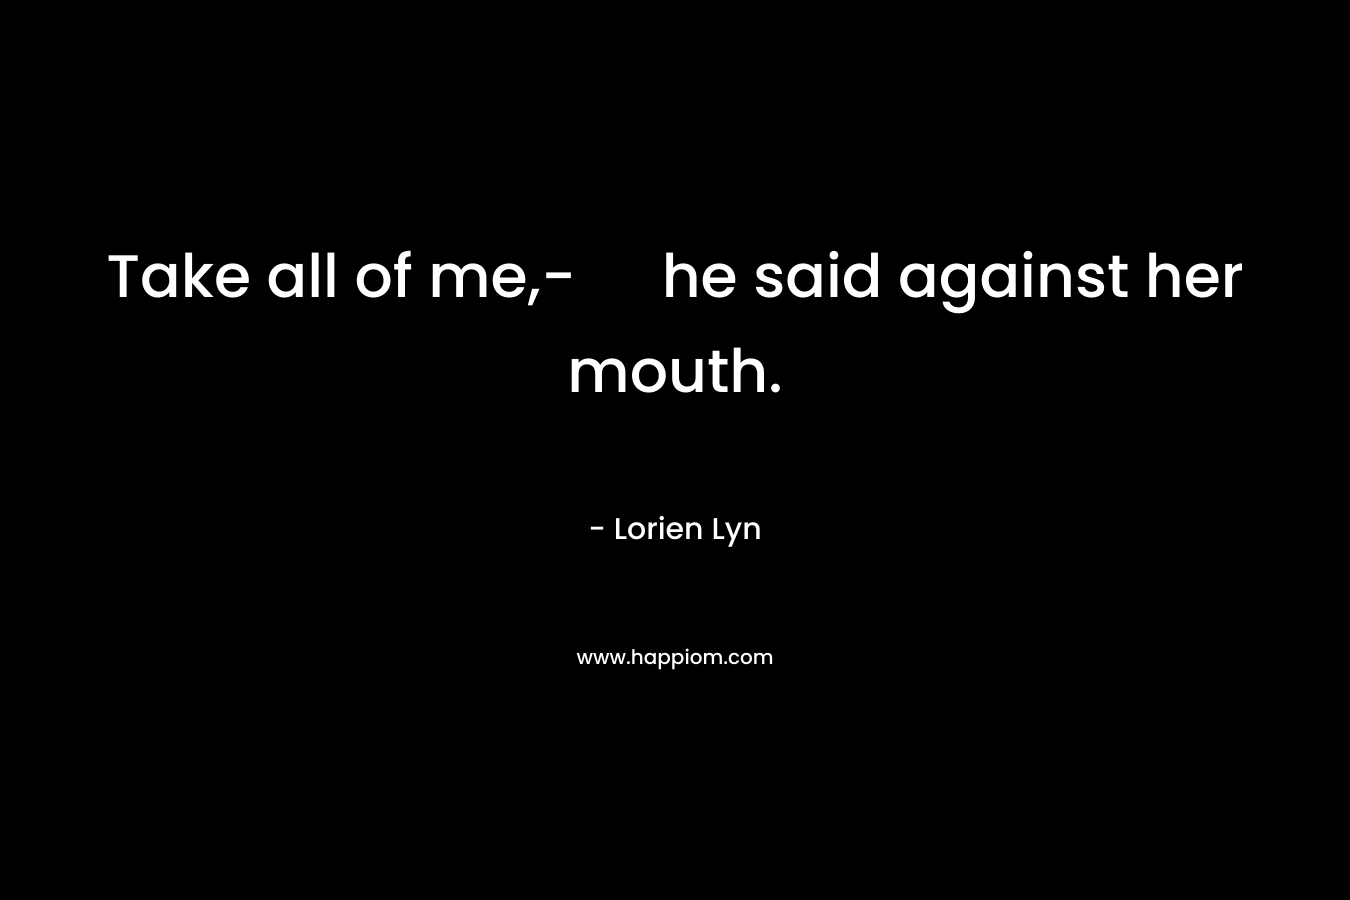 Take all of me,- he said against her mouth.